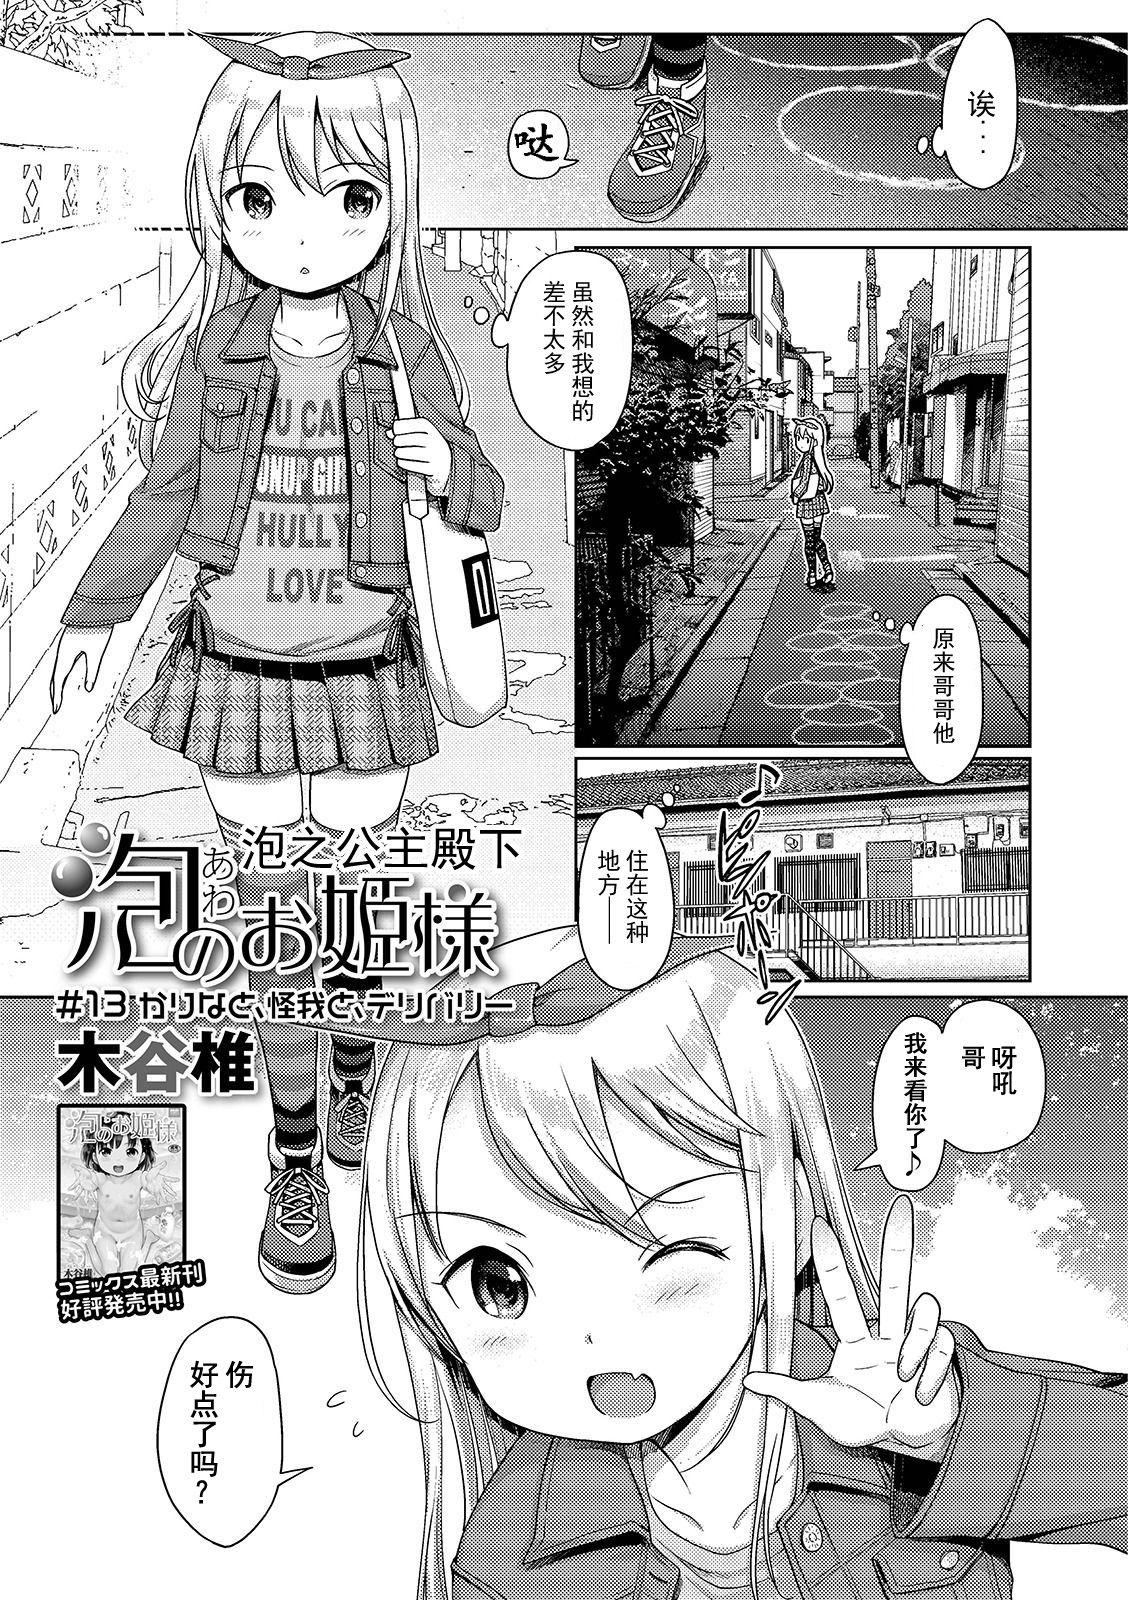 Bare Awa no Ohime-sama #13 Karina to, Kega to, Delivery Busty - Page 2